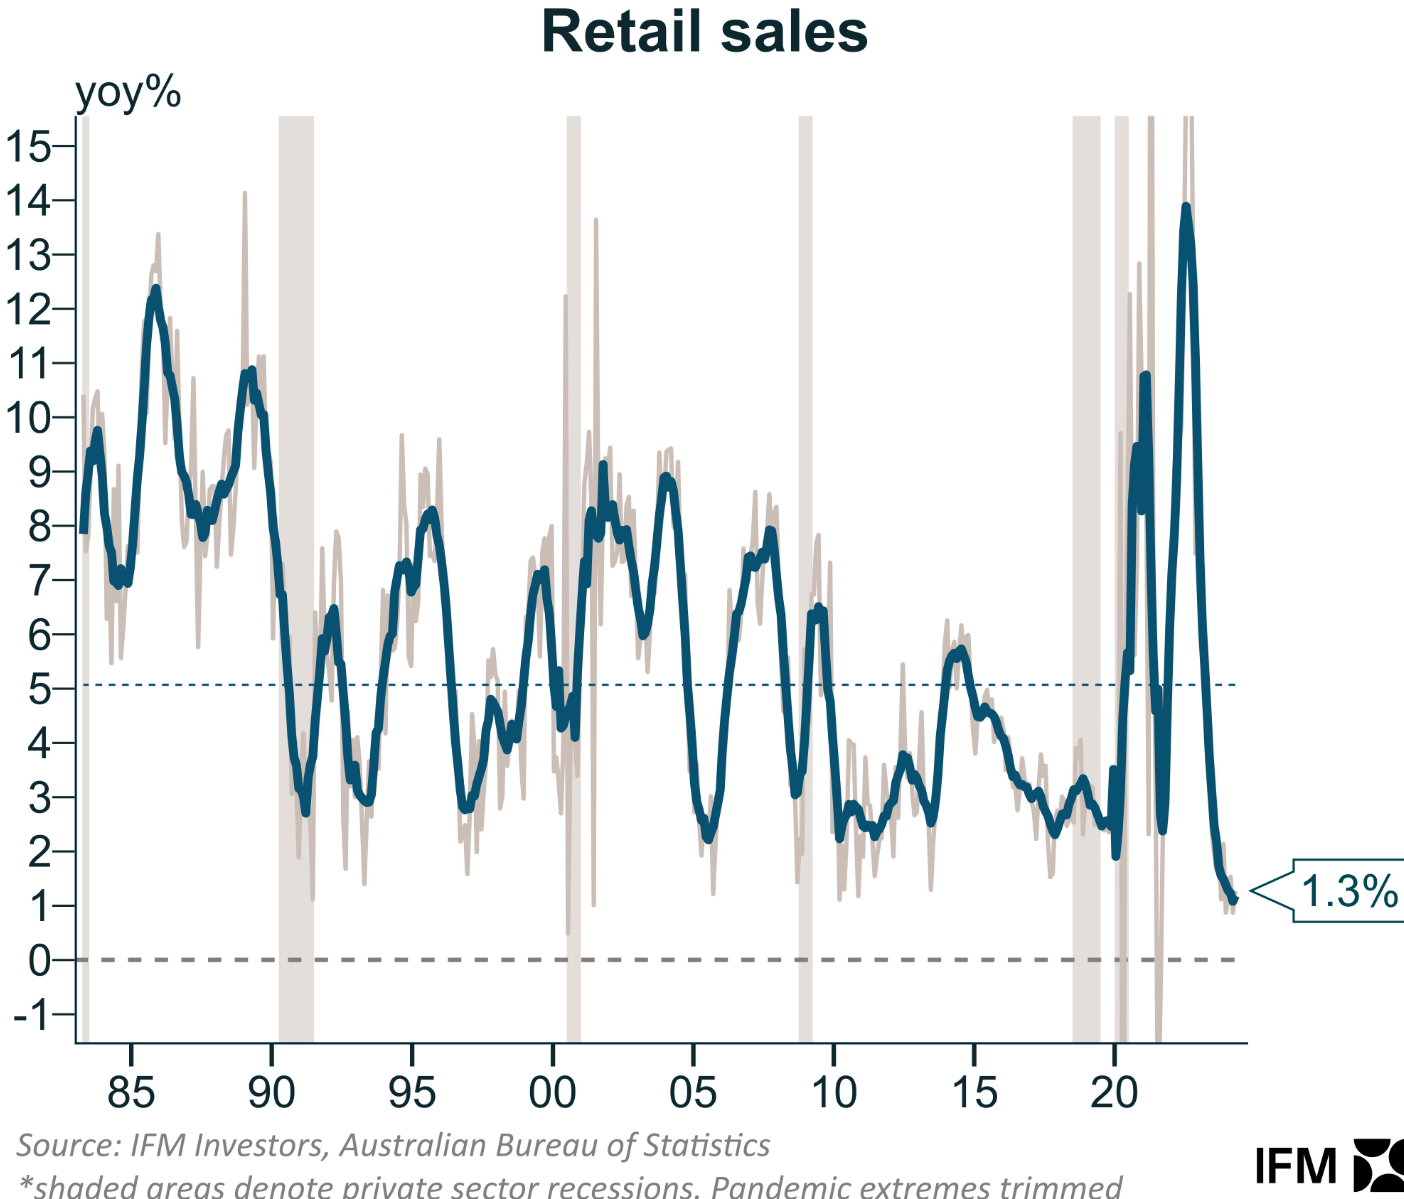 Annual retail sales